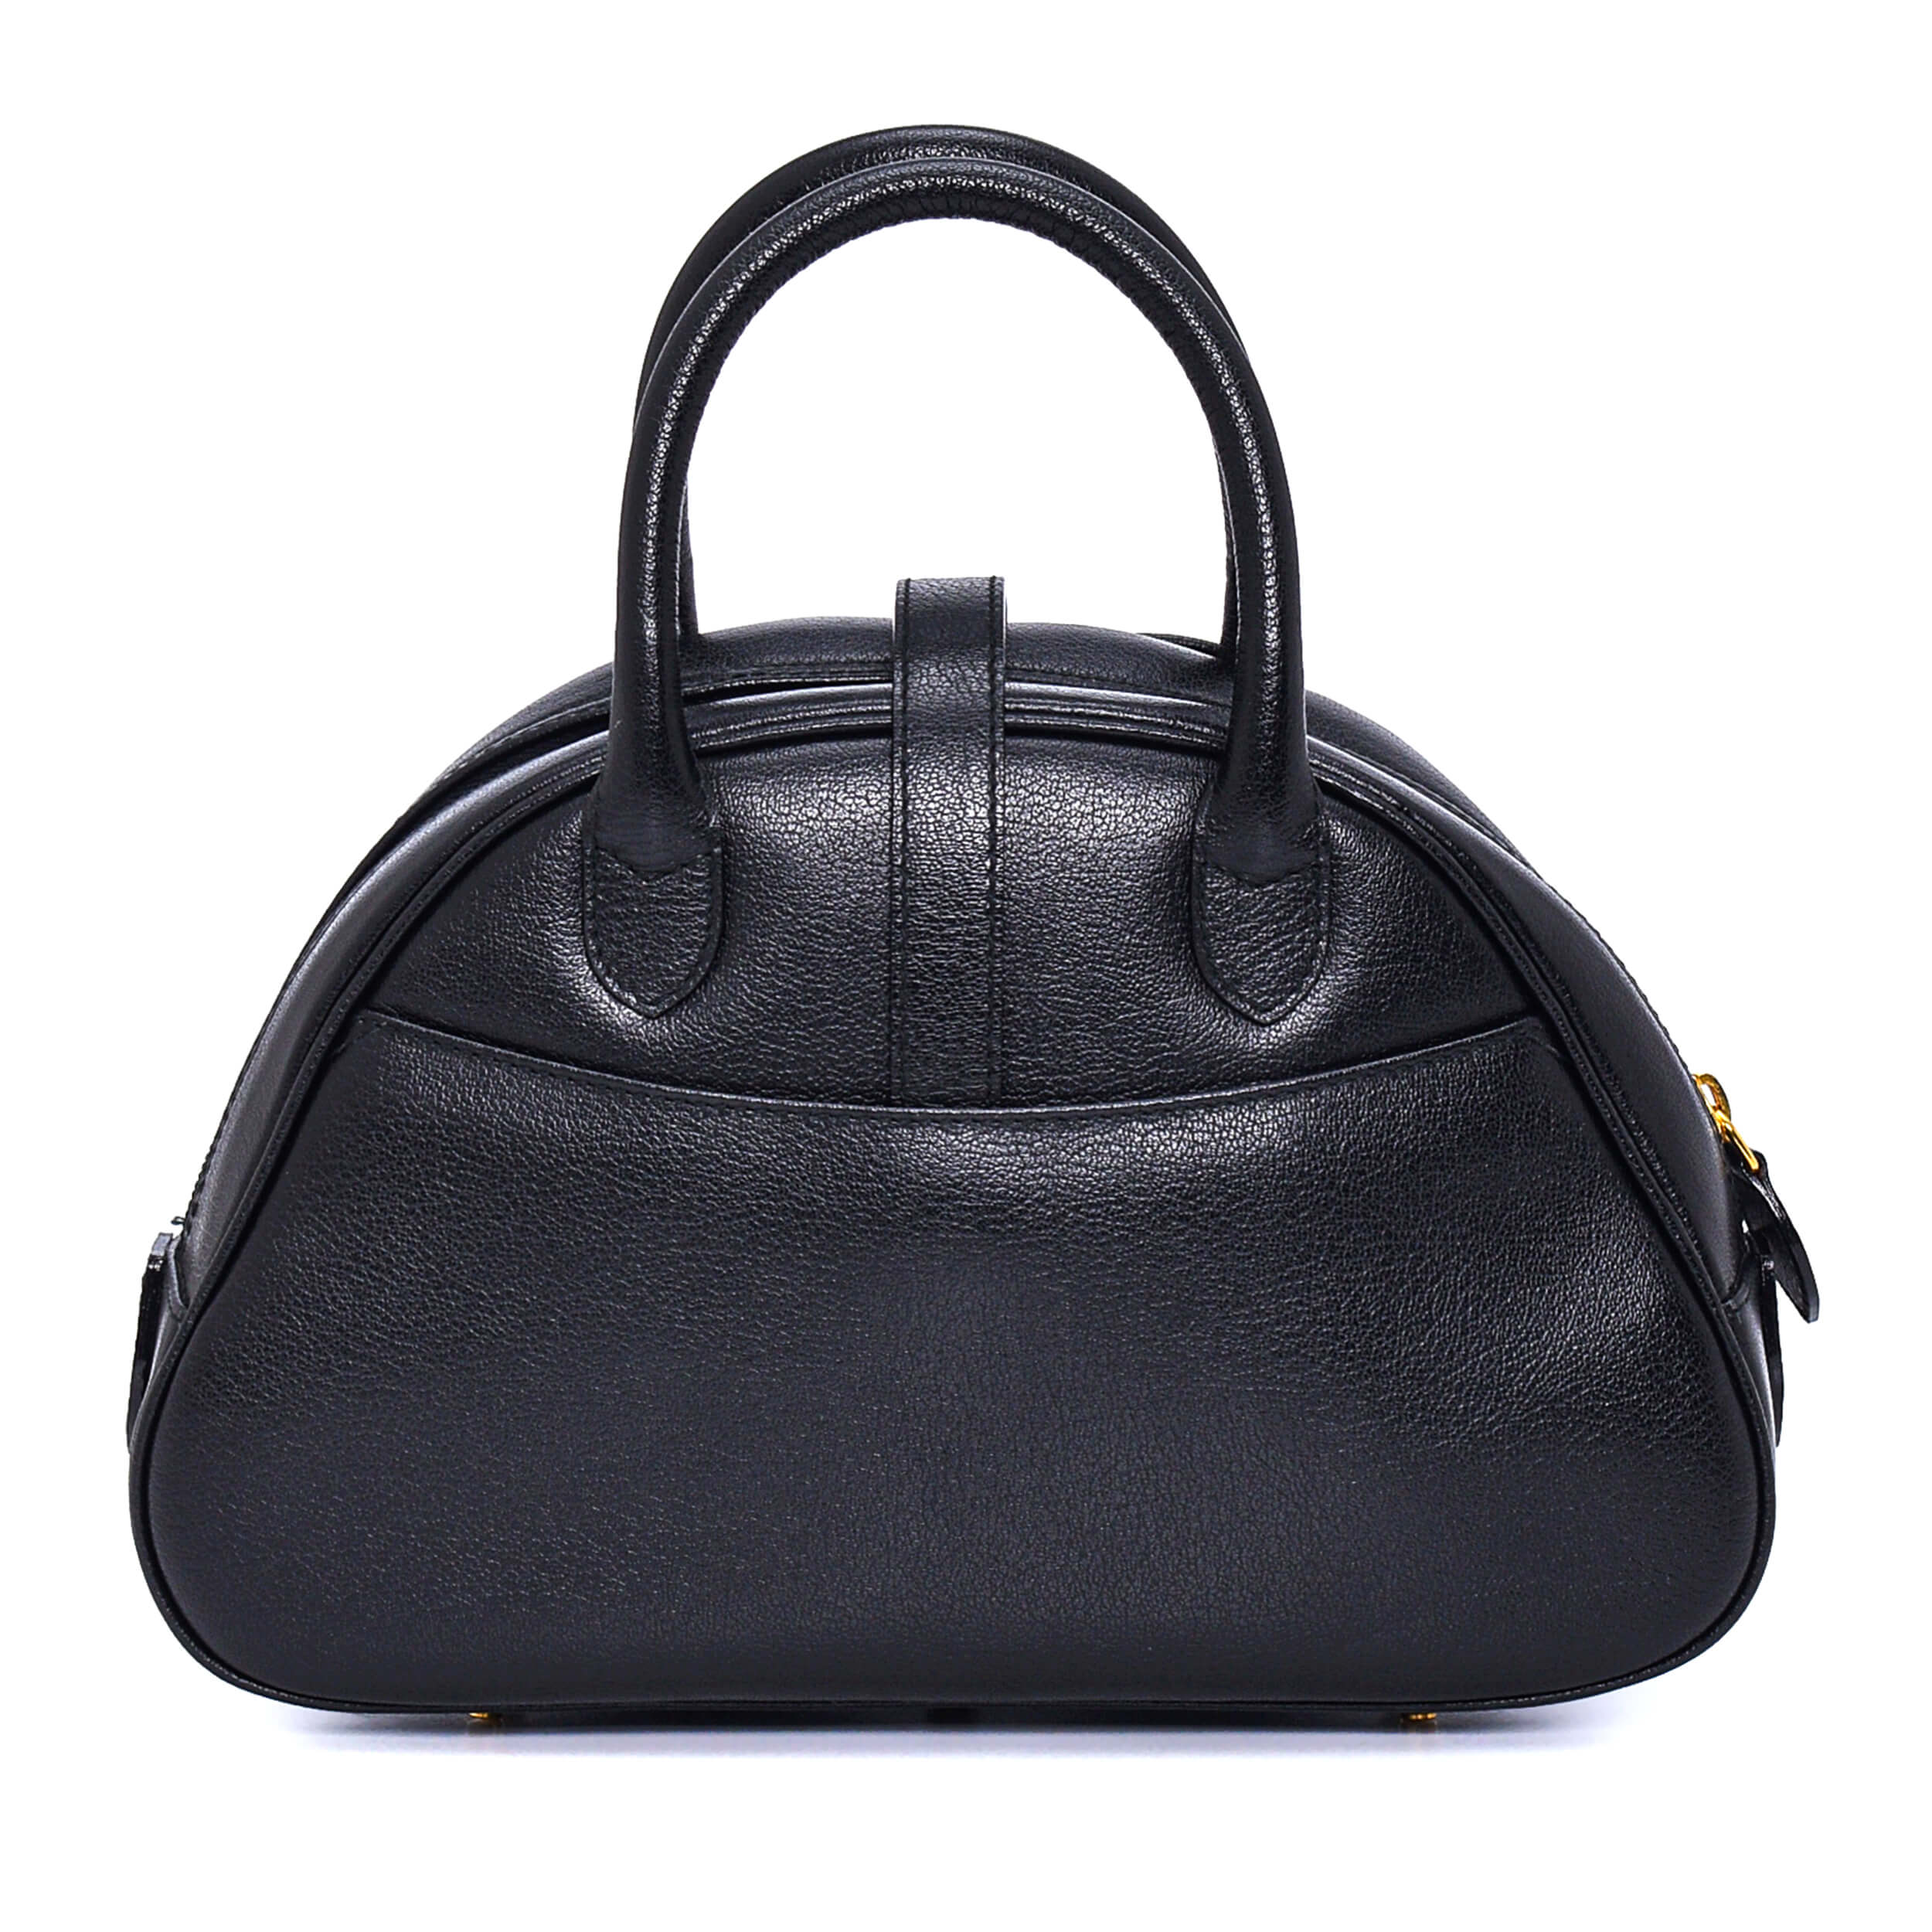 Christian Dior - Black Leather Limited Edition Bowler Bag